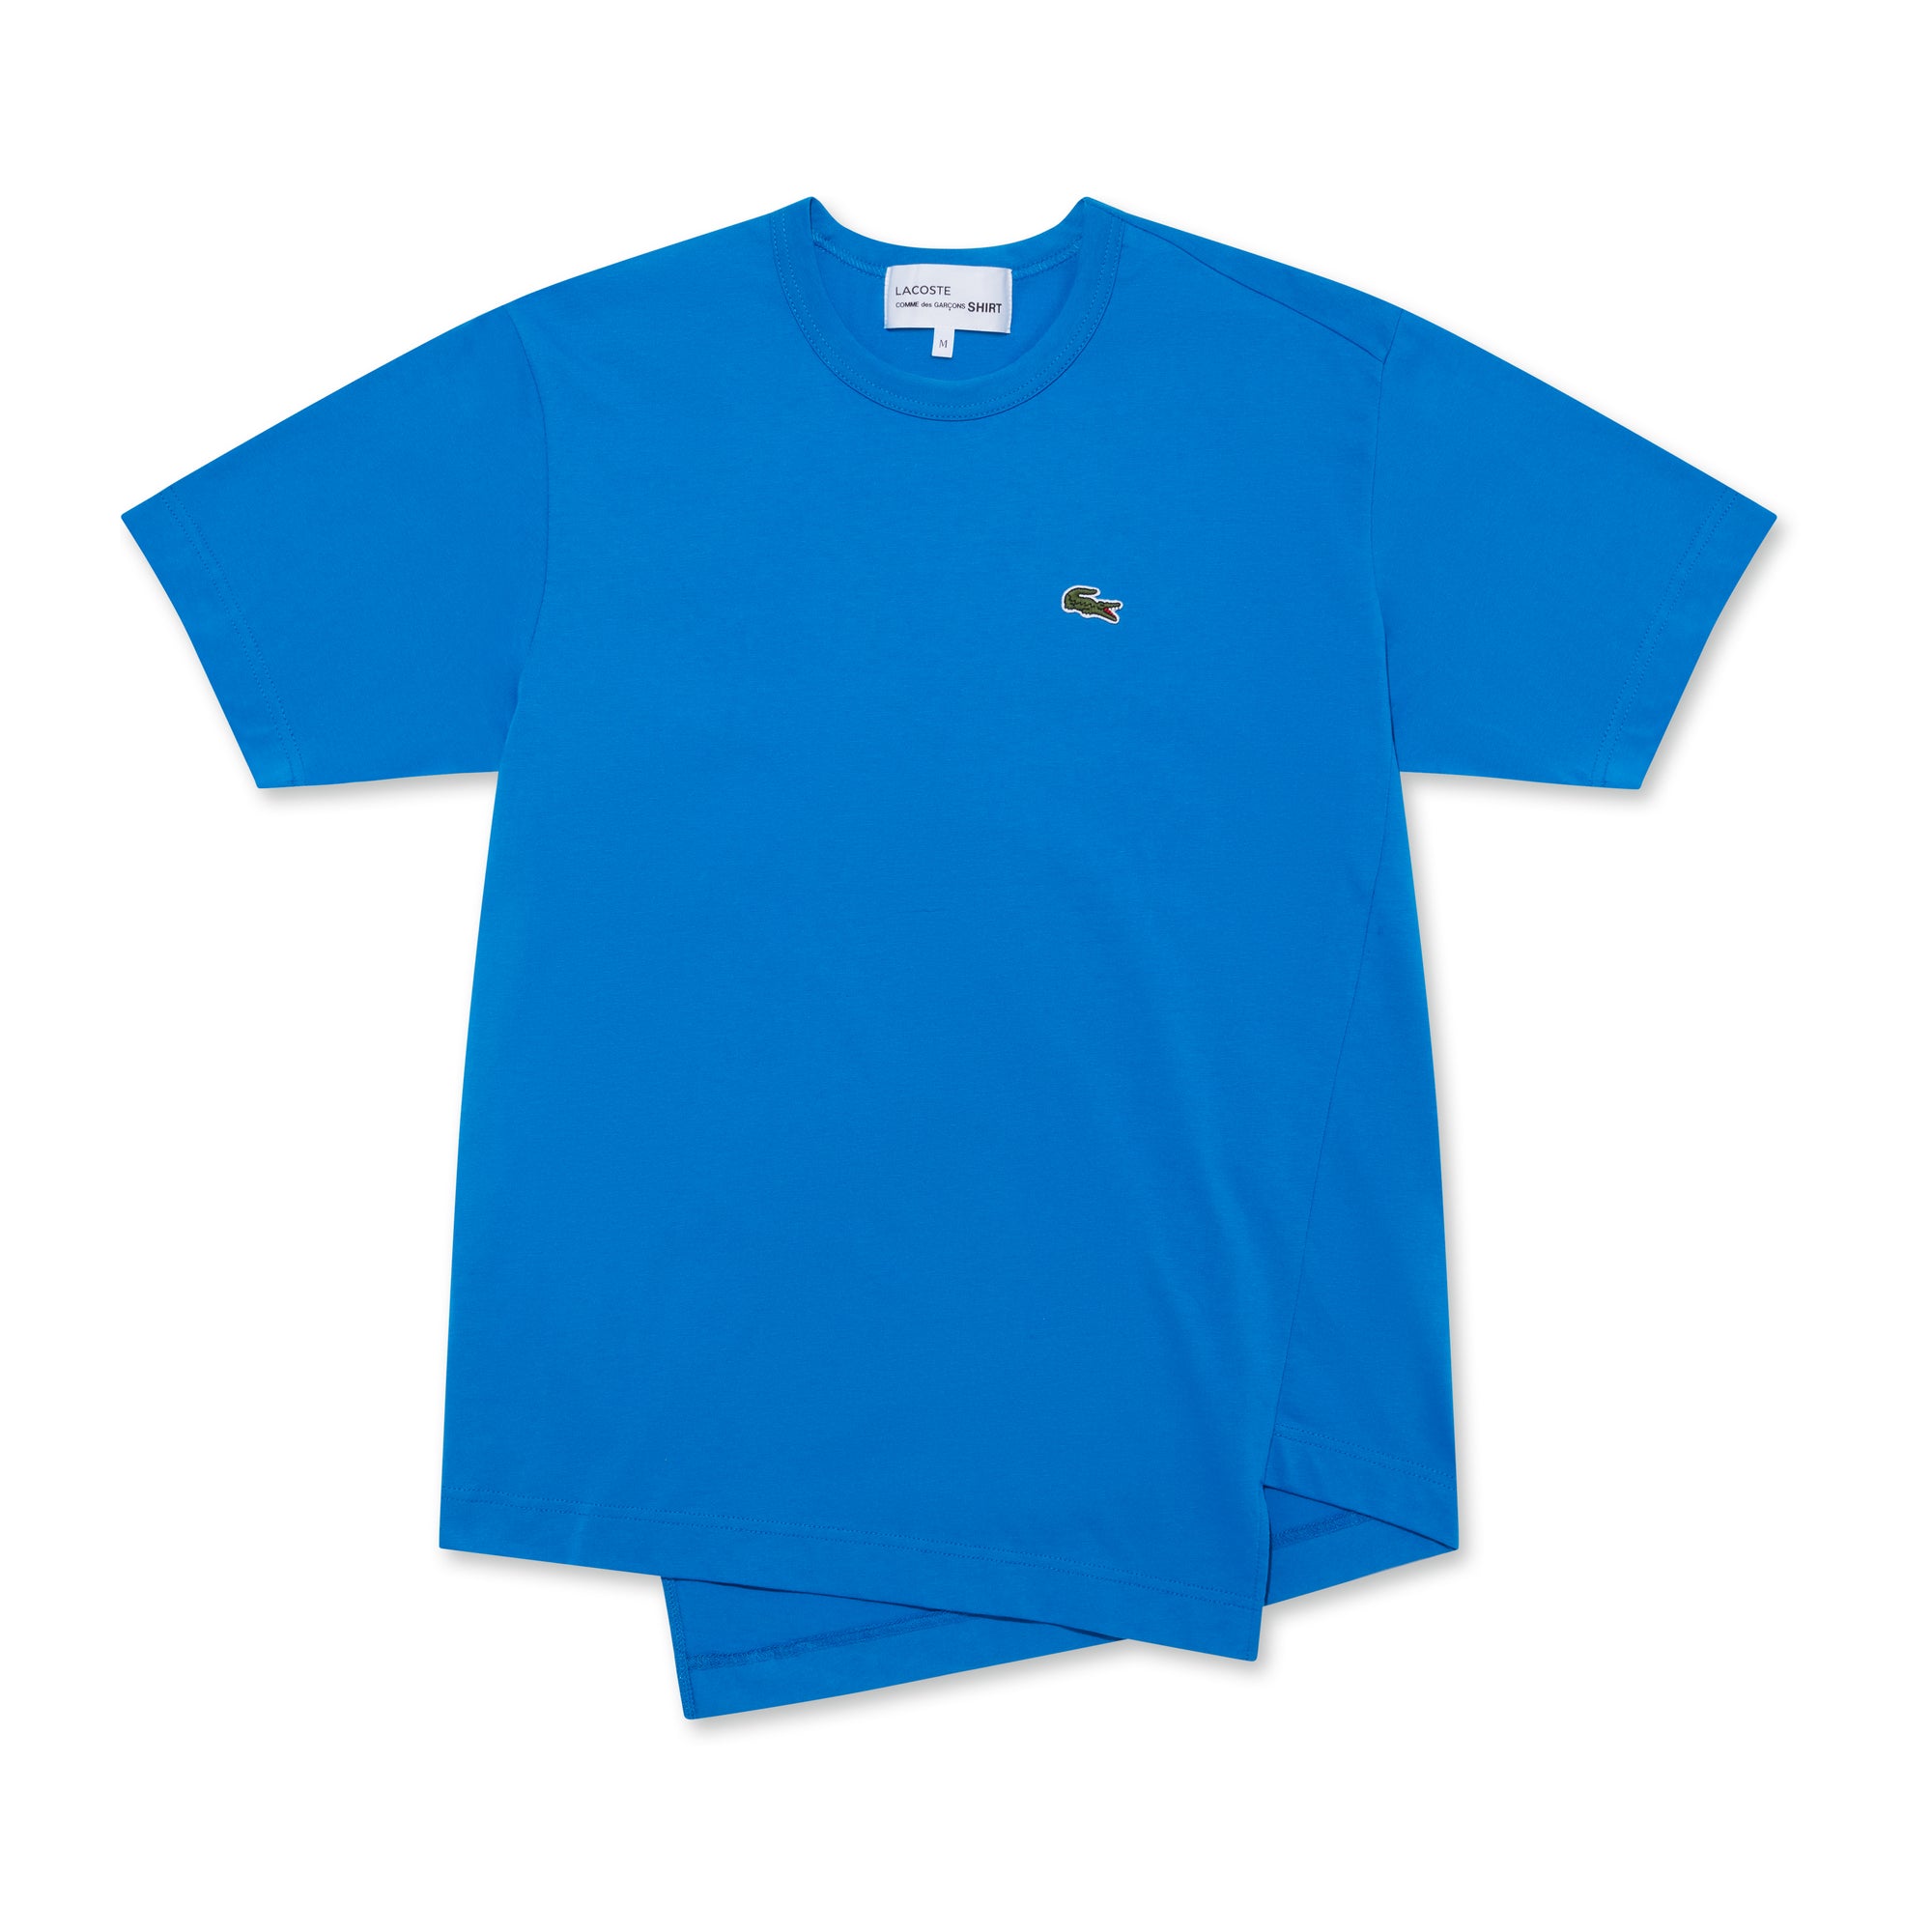 CDG Shirt - Lacoste Men’s T-Shirt - (Blue) view 5